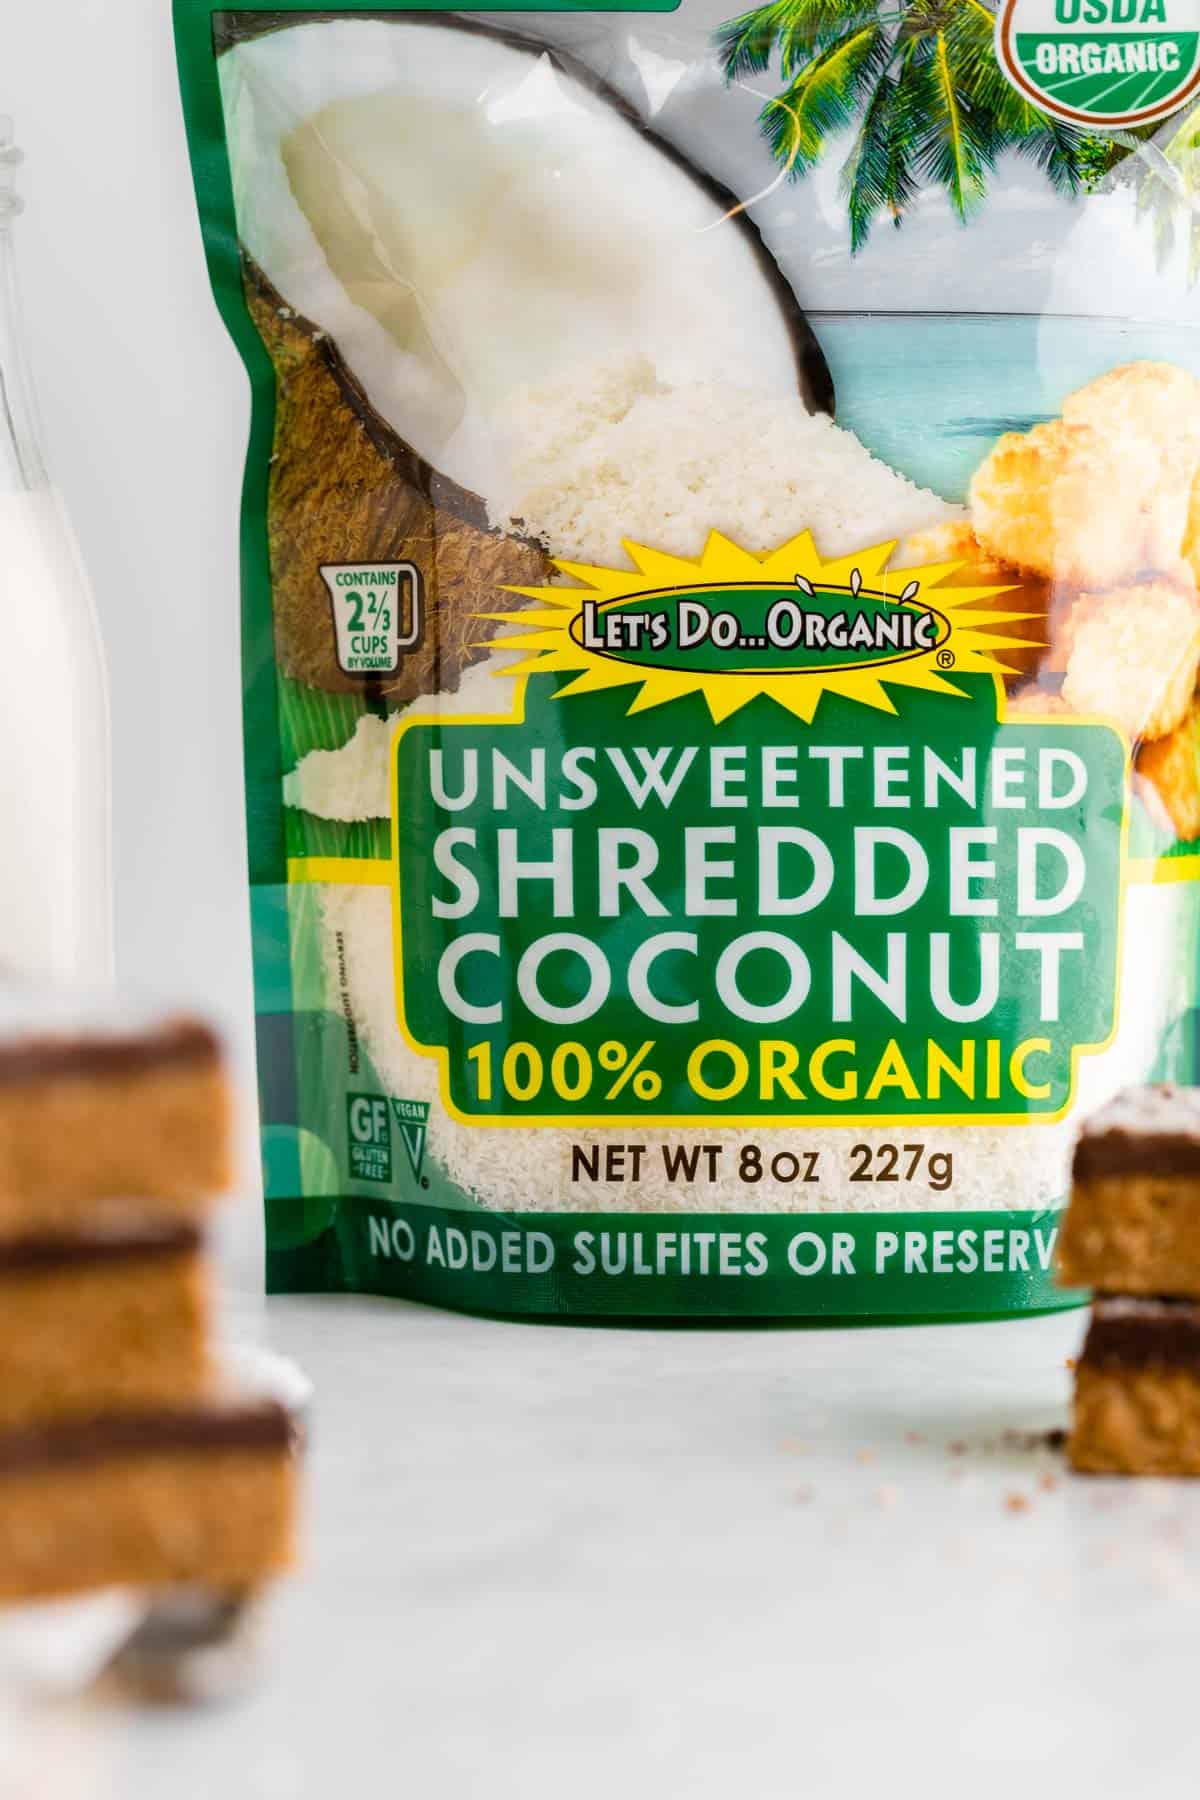 a bag of let's do organic unsweetened shredded coconut beside vegan homemade protein bars